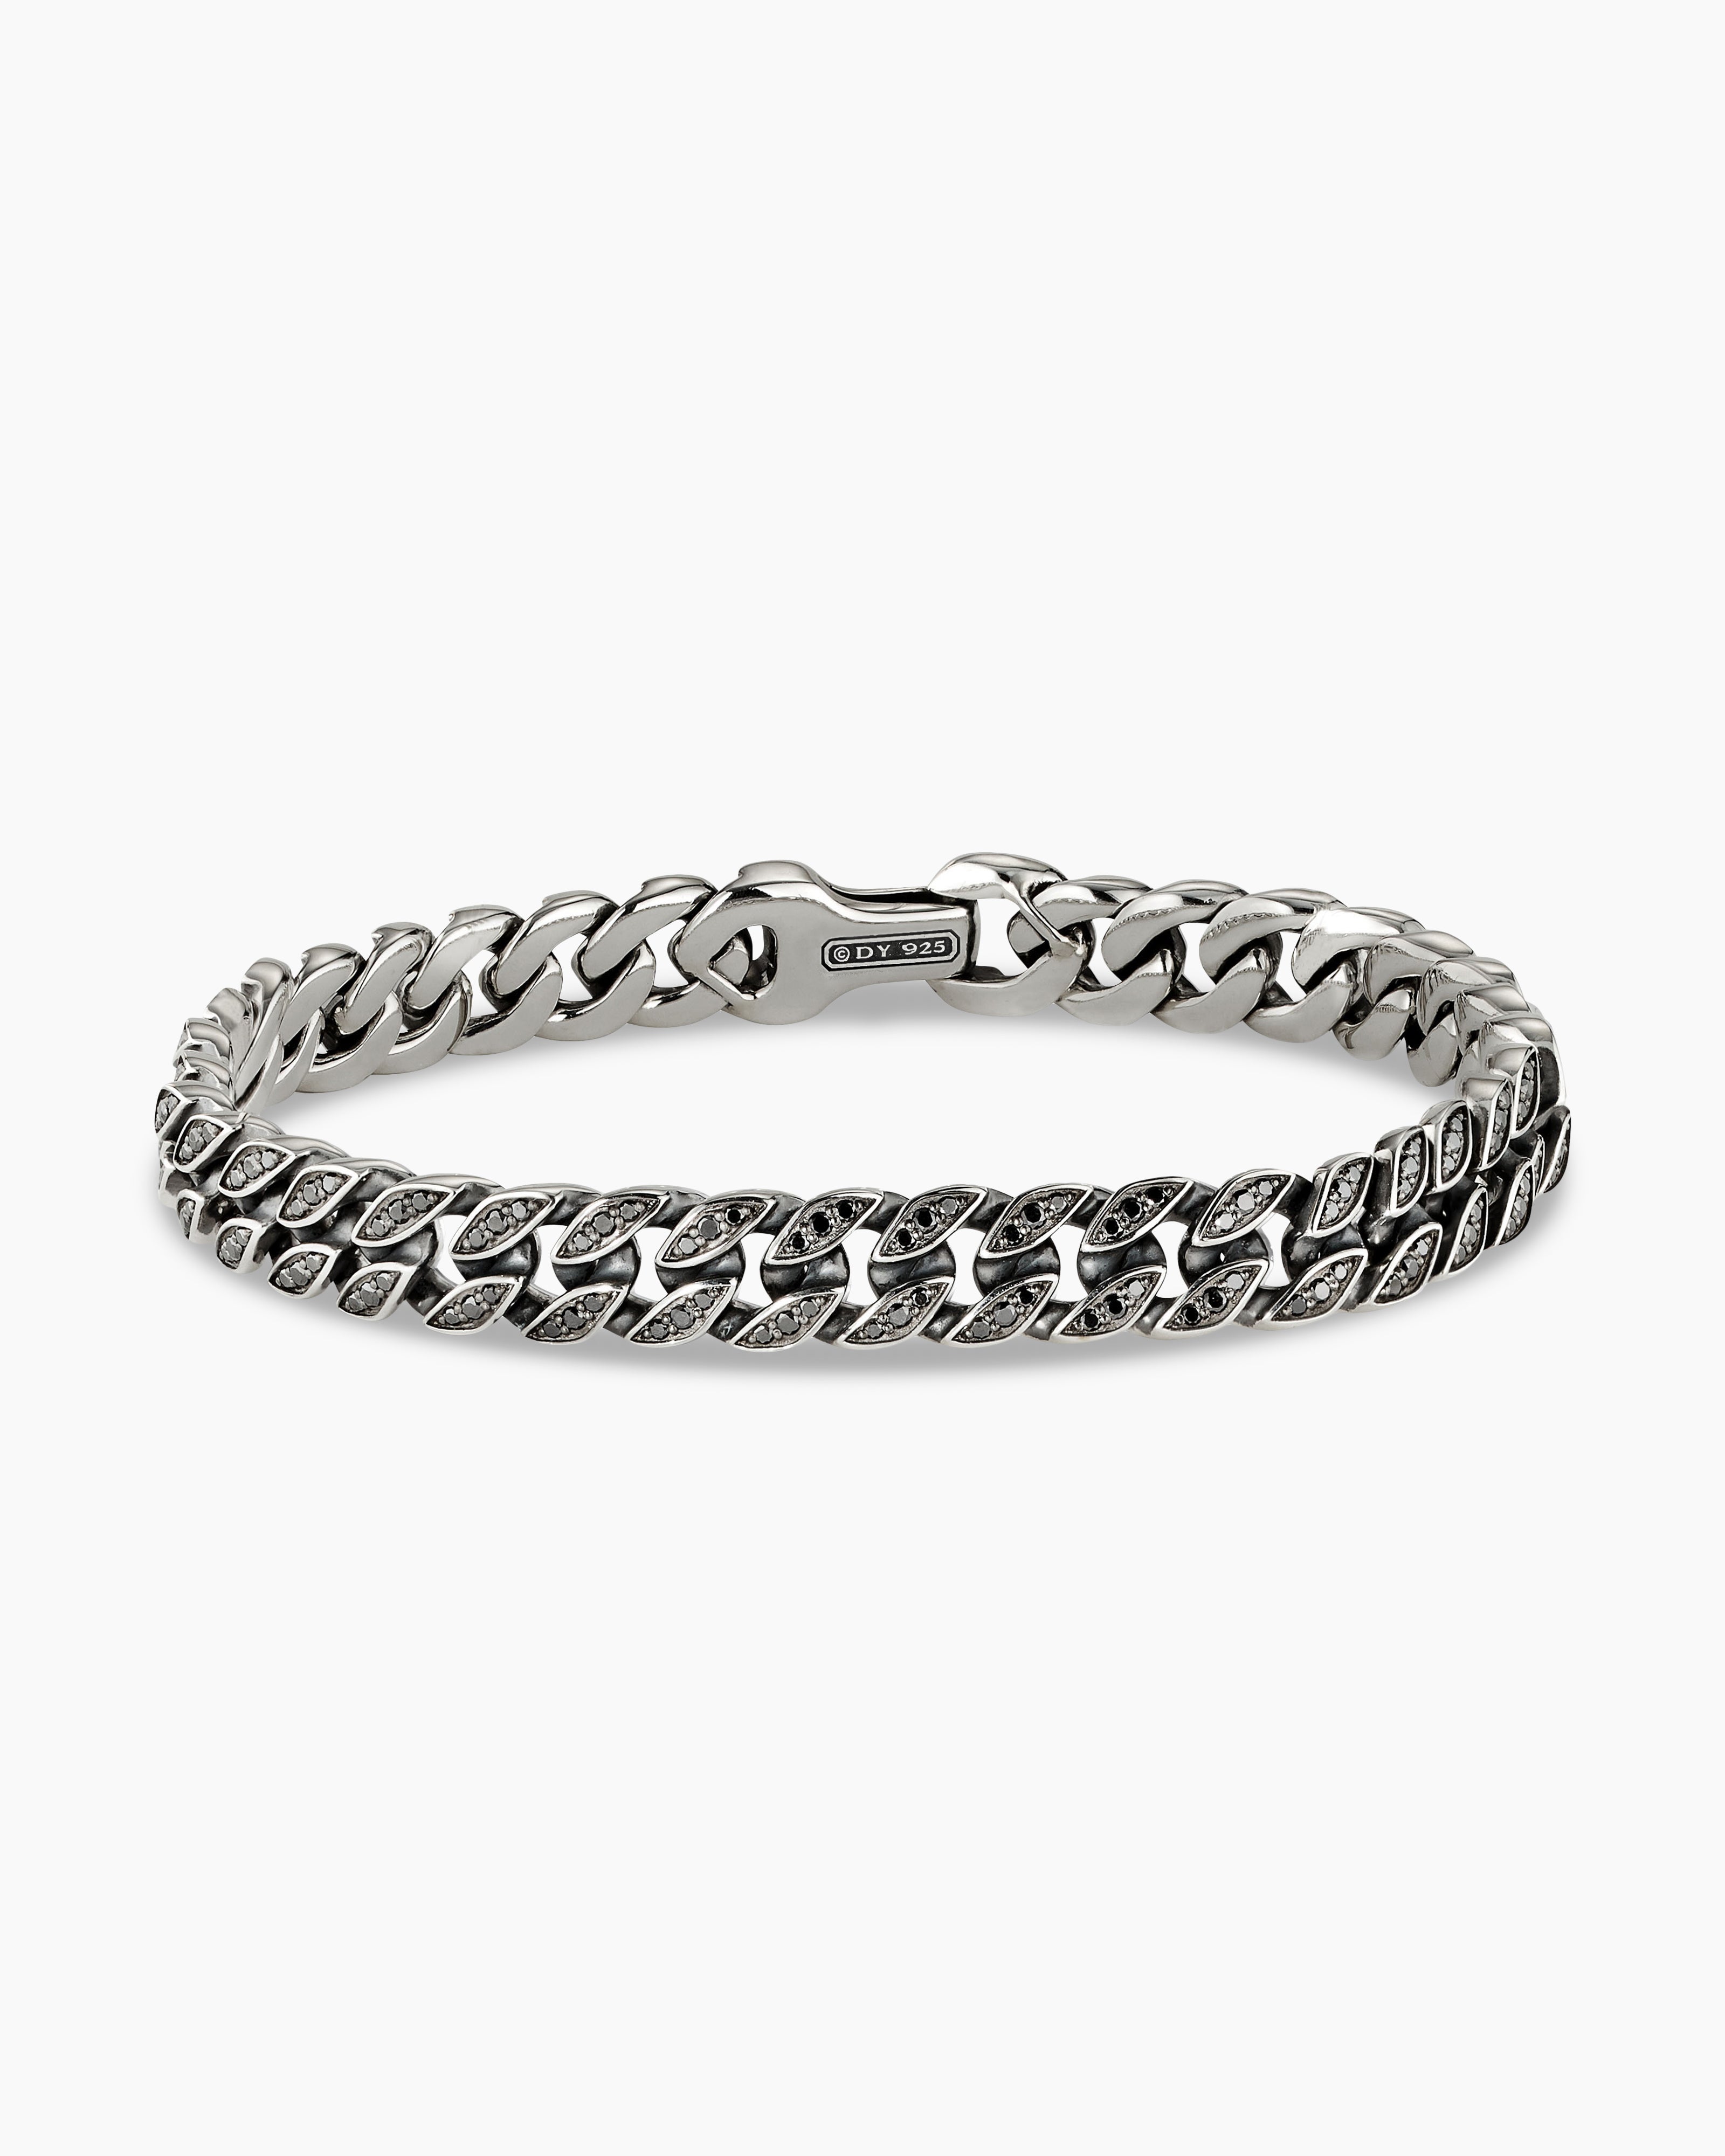 Curb Chain Bracelet in Sterling Silver, 8mm | David Yurman